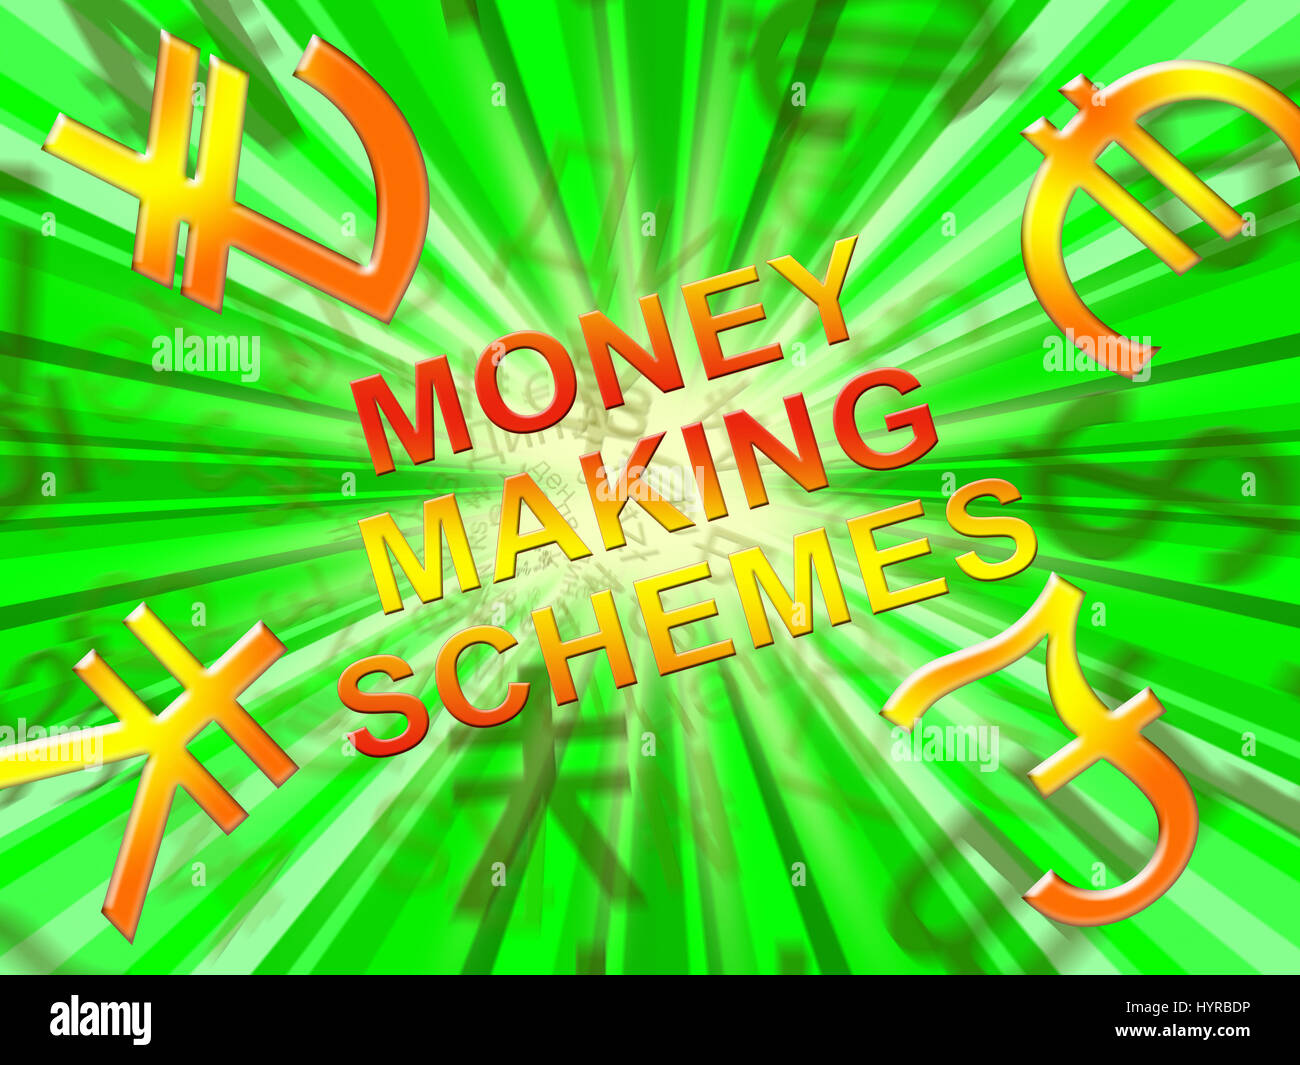 Money Making Schemes Symbols Means Wealth System 3d Illustration Stock Photo